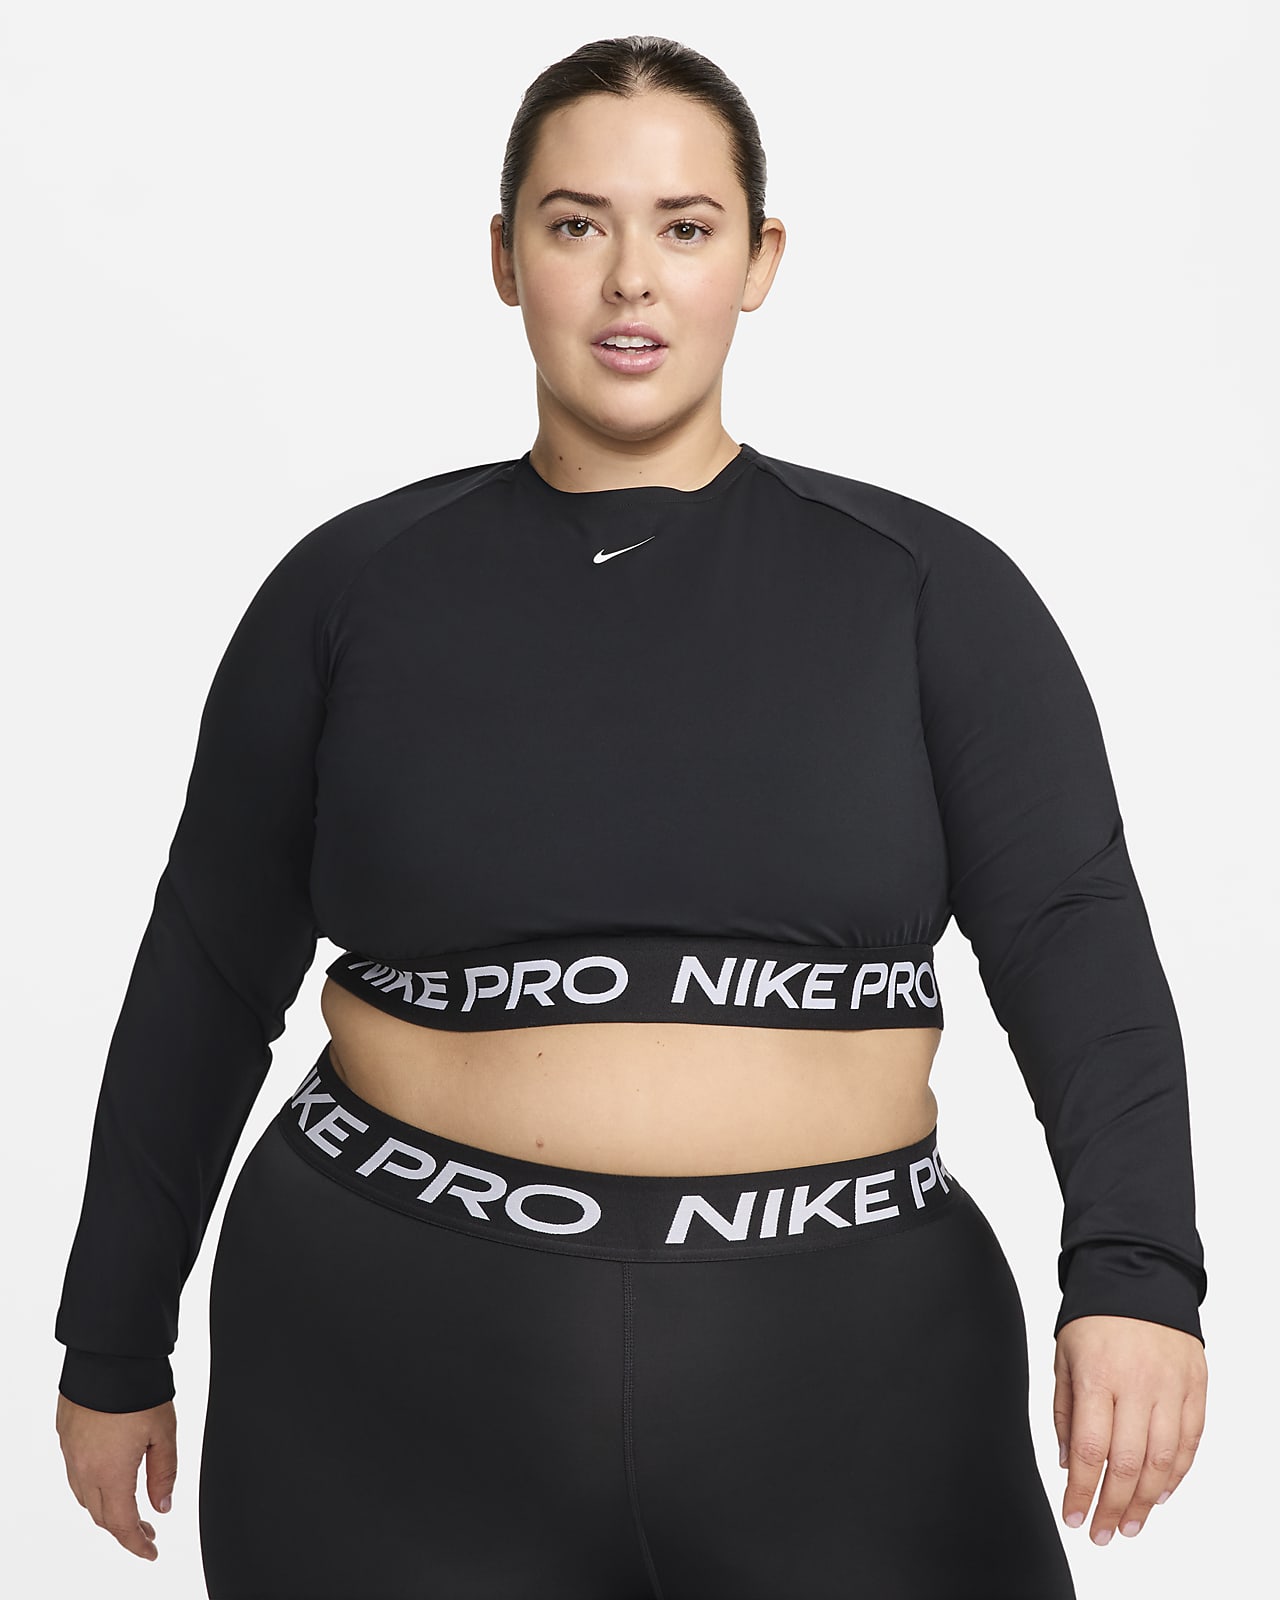 Nike Pro 365 Women's Leggings (Plus Size). UK